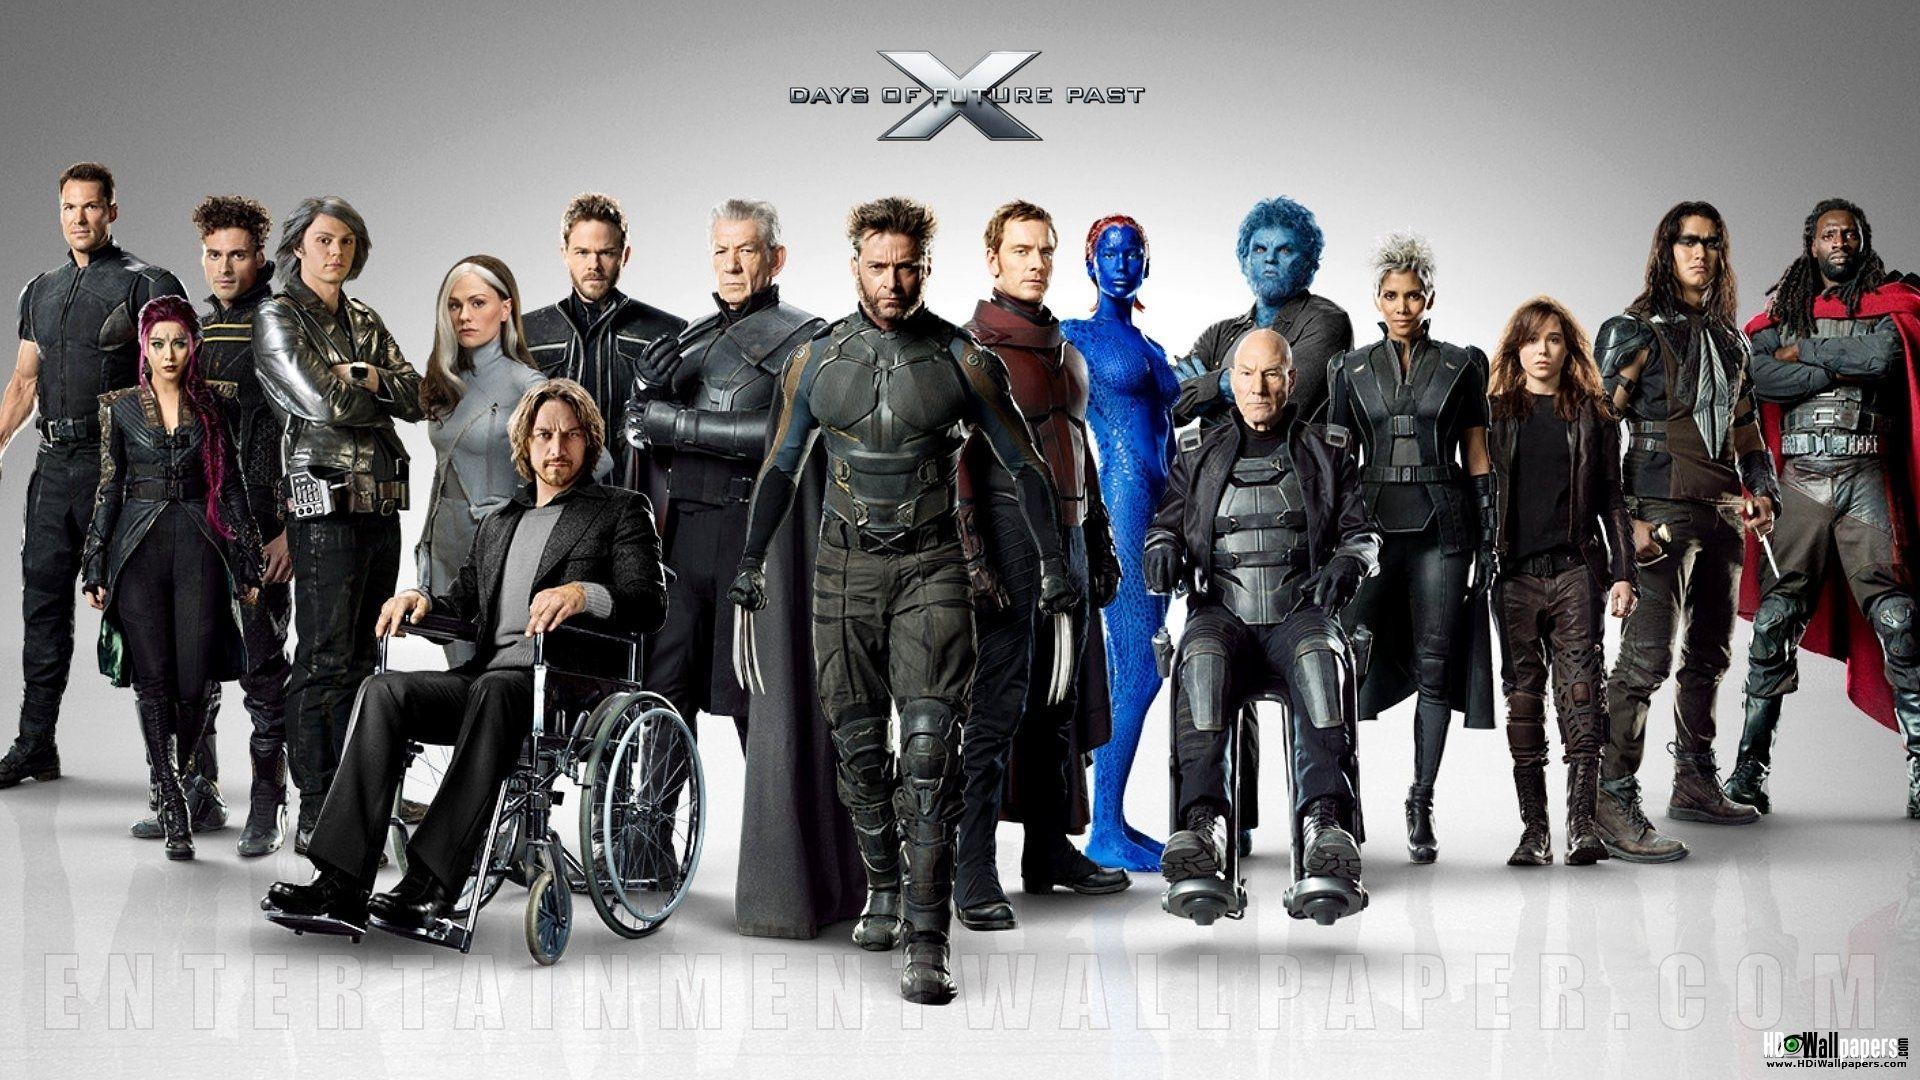 X Men Days Of Future Past HD Wallpaper Free Download Photo 1